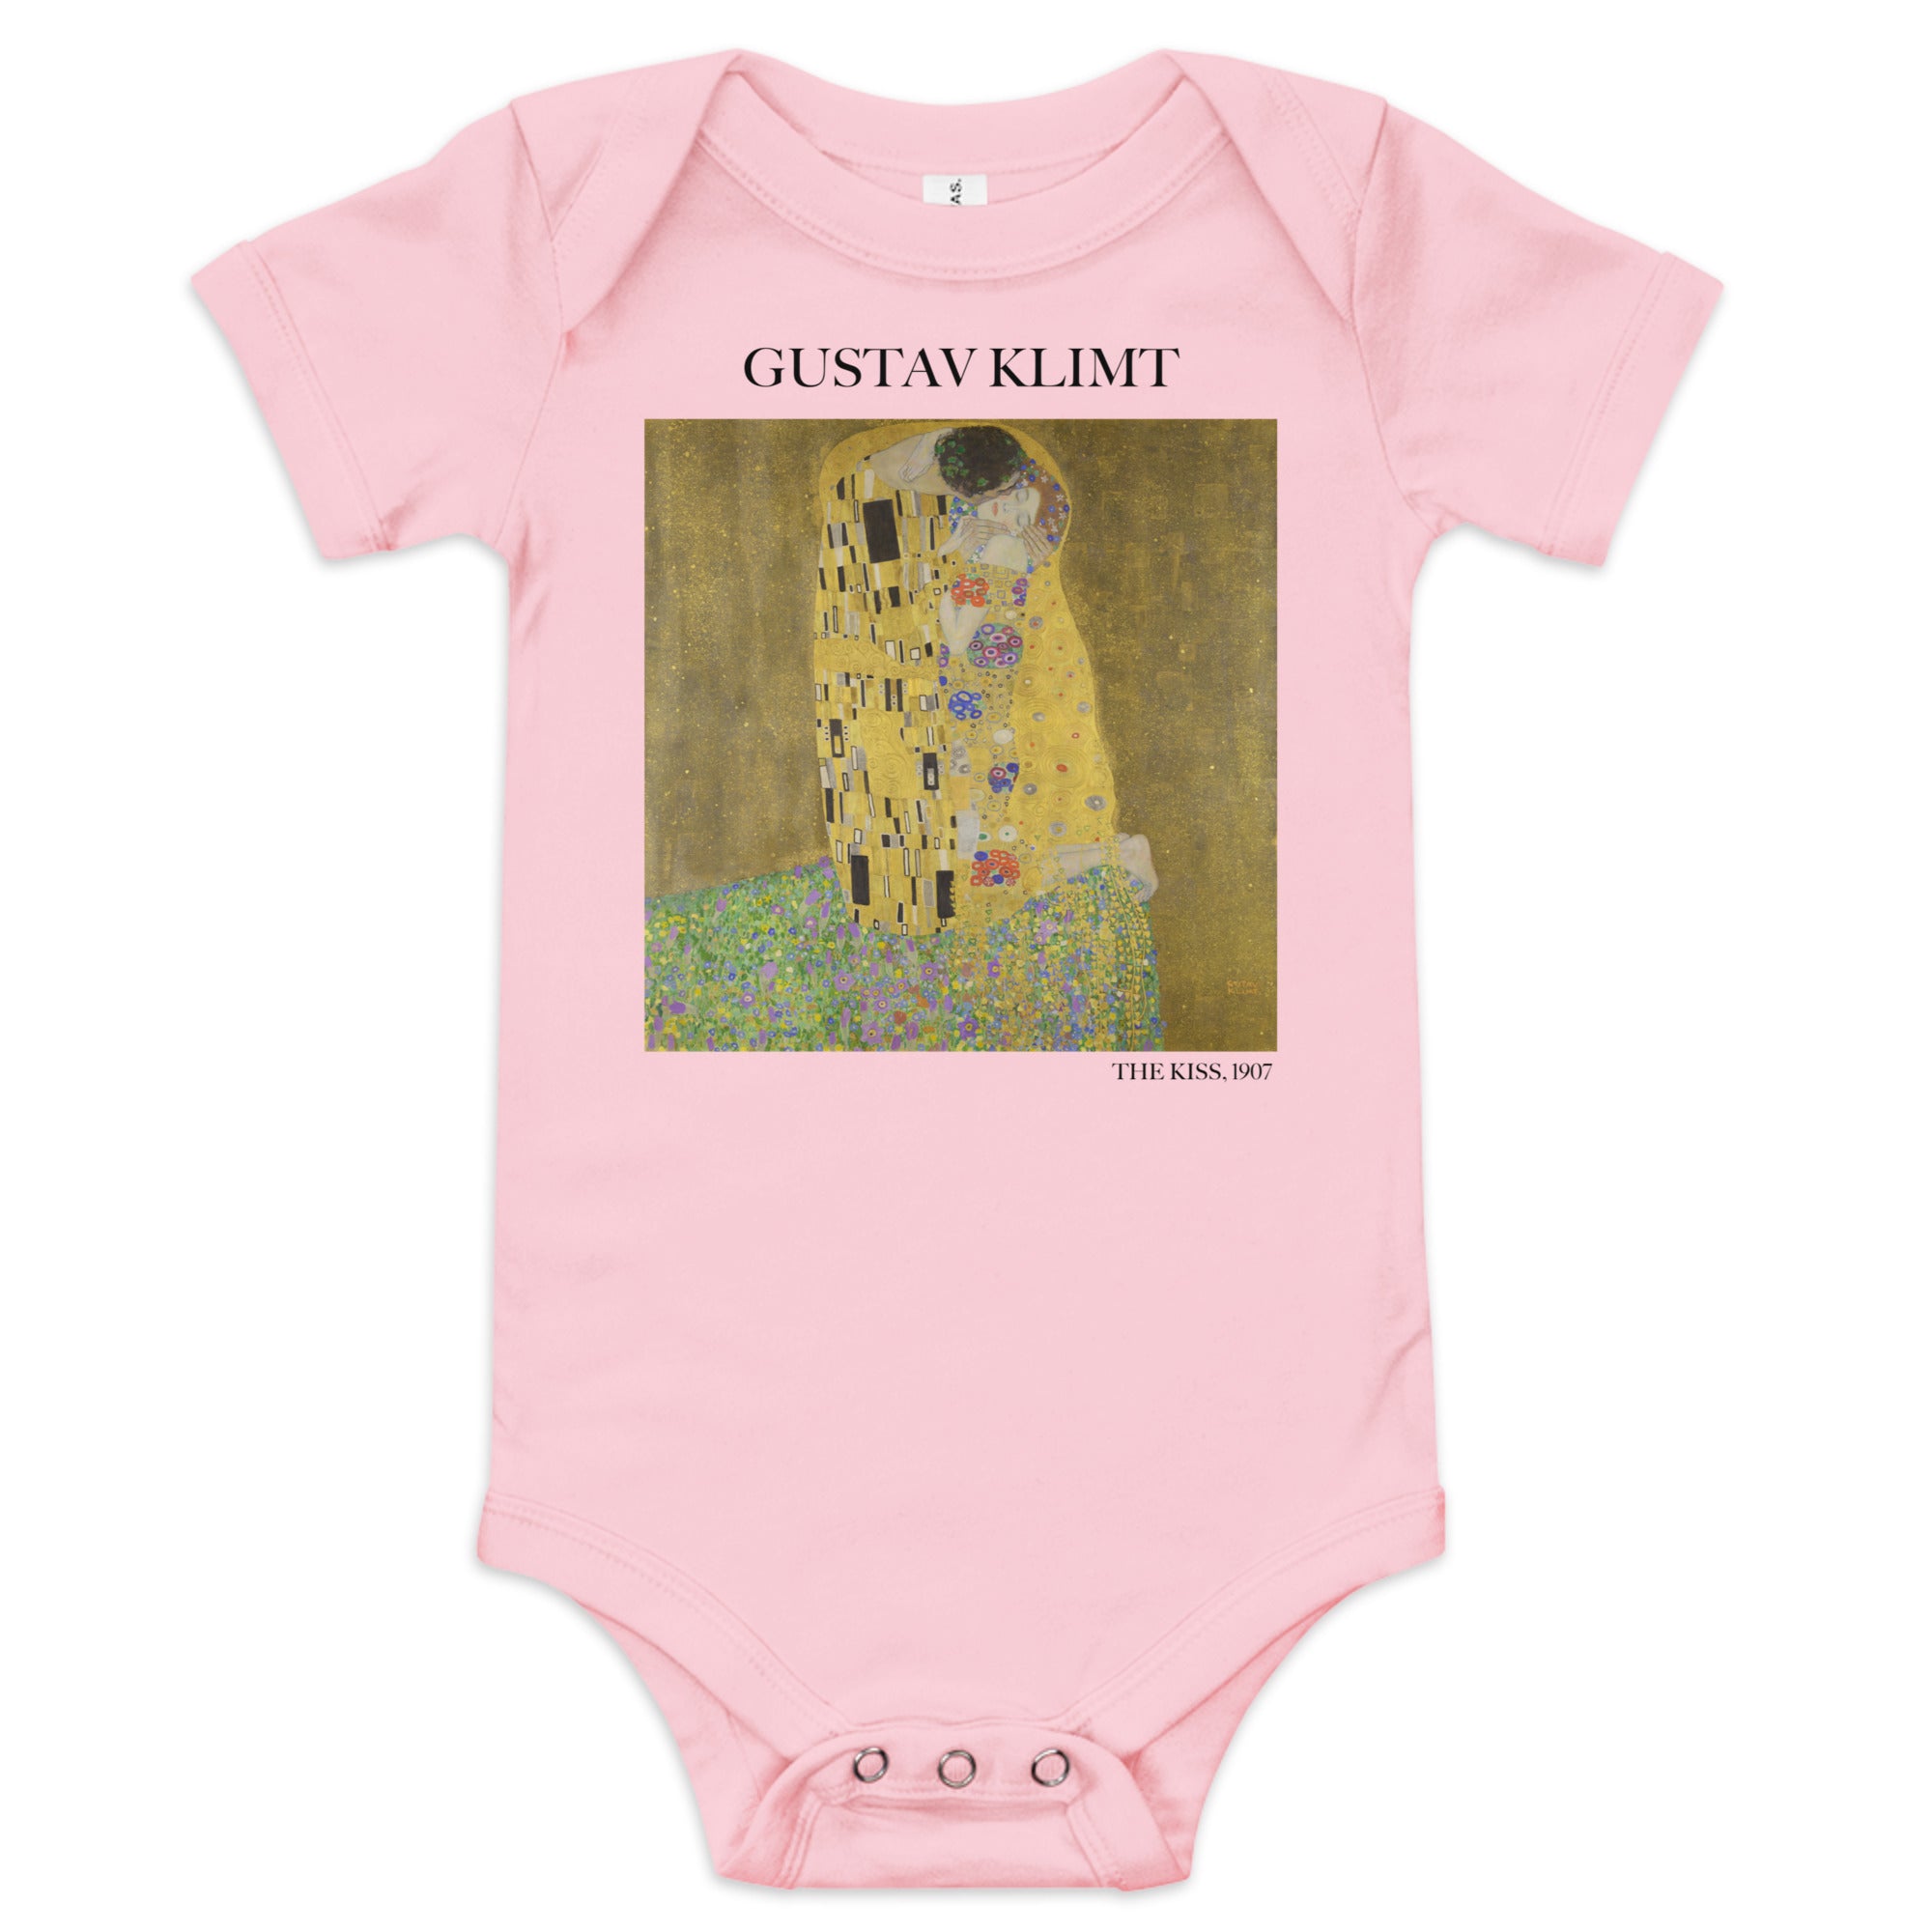 Gustav Klimt 'The Kiss' Famous Painting Short Sleeve One Piece | Premium Baby Art One Sleeve